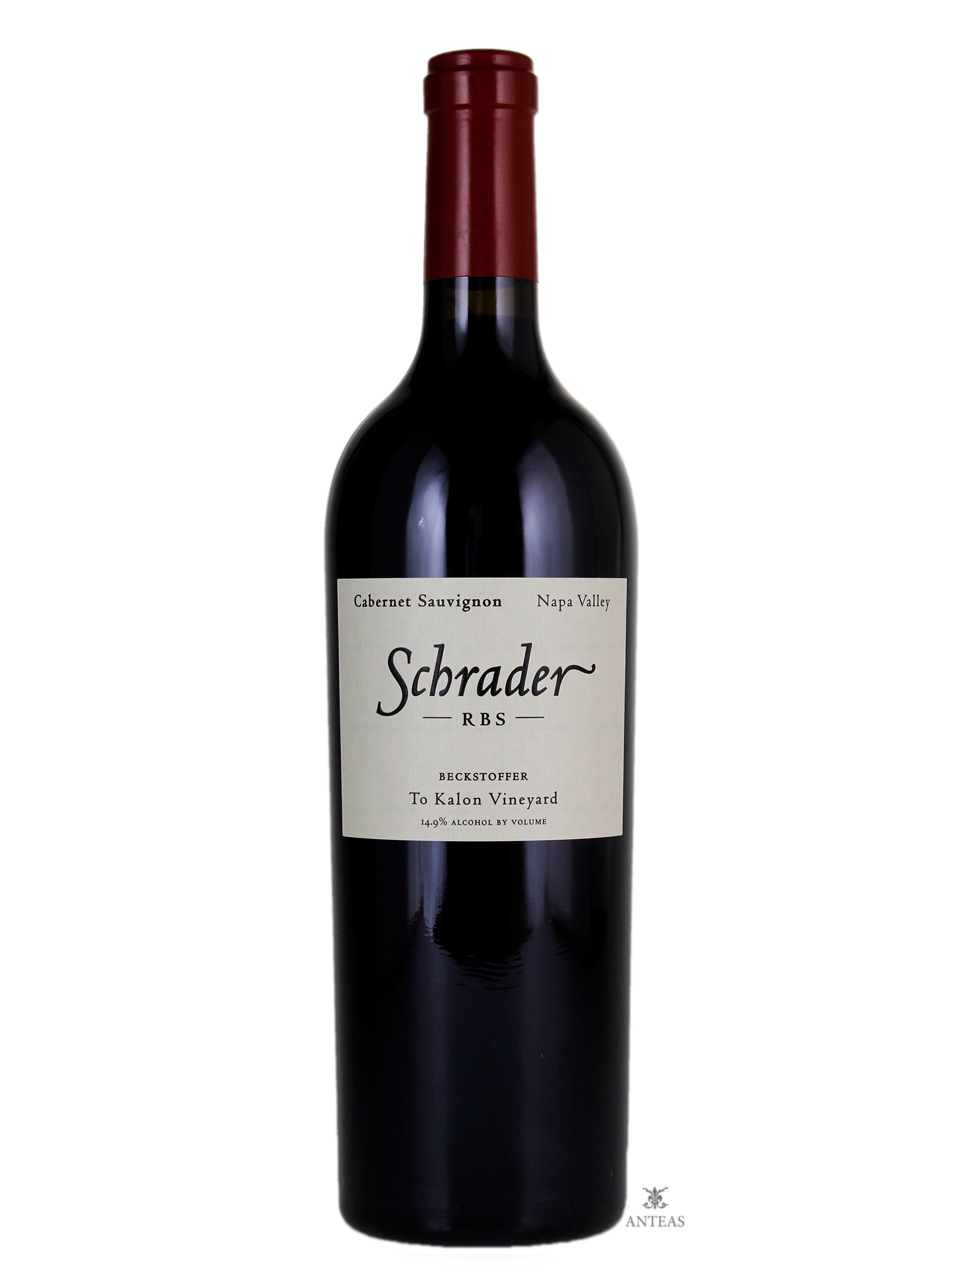 Schrader Cellars – Cabernet Sauvignon RBS Beckstoffer To Kalon Vineyard 2002